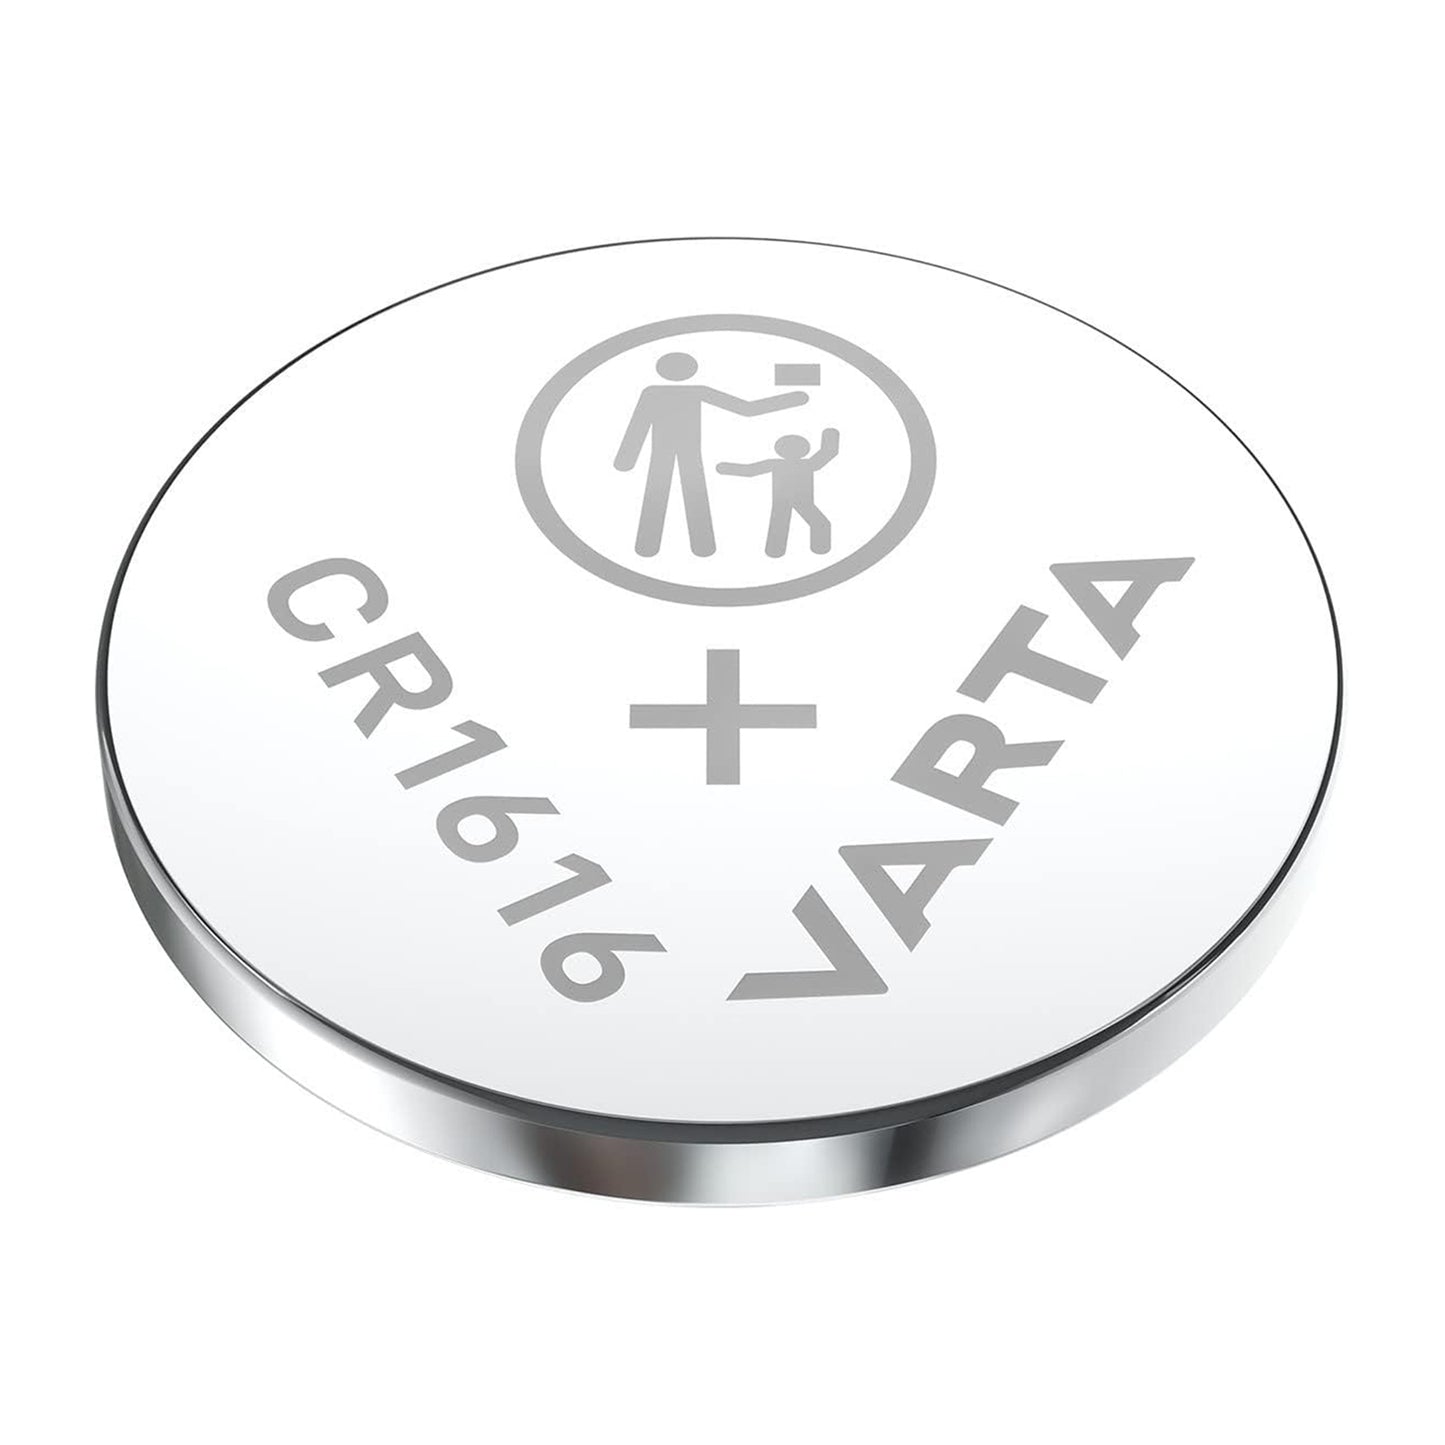 VARTA CR1616 Lithium coin cell battery 3V, flat cell, specialist, diameter 16mm